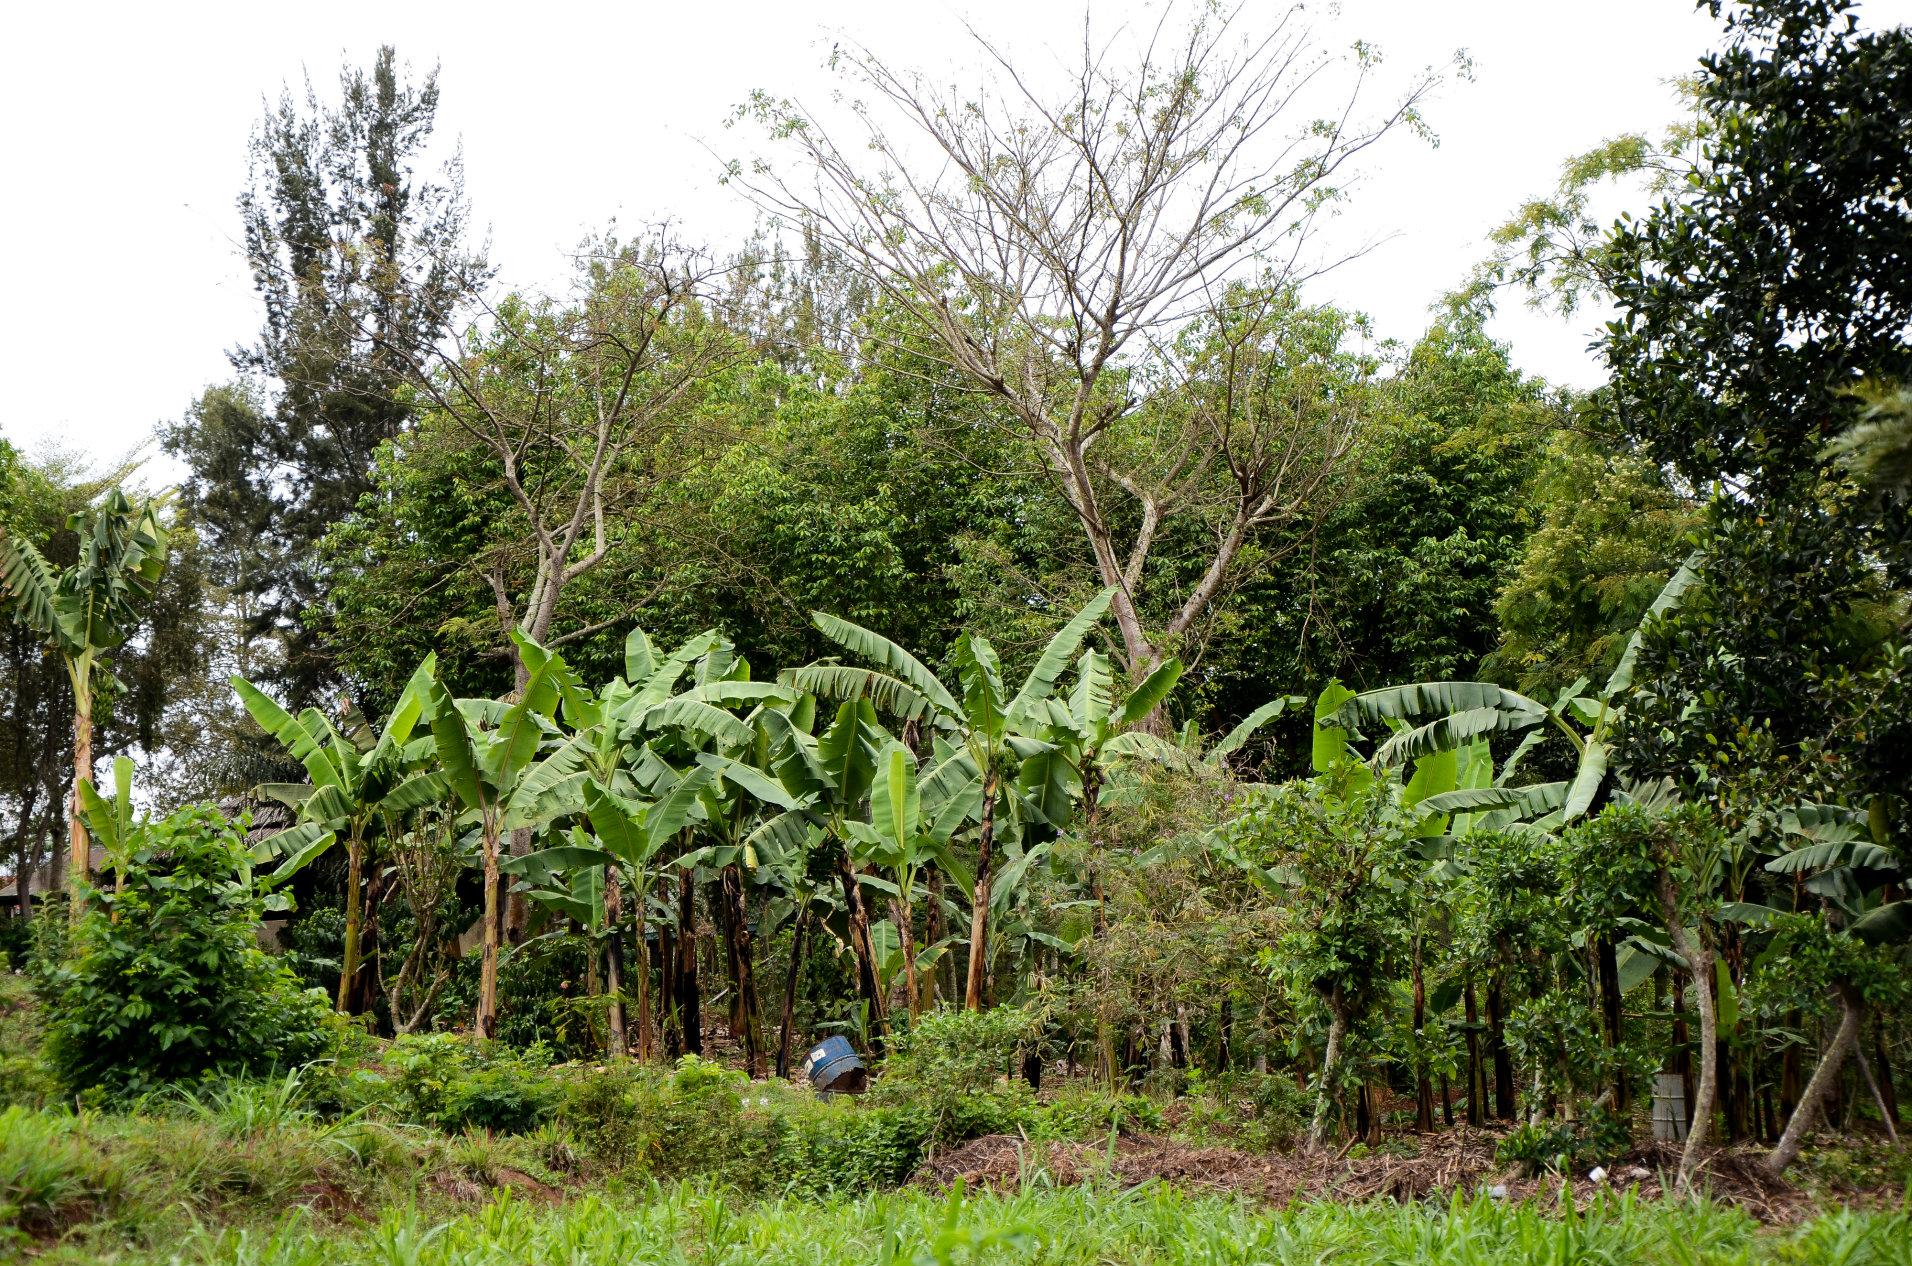 Rushil plants 120 million agroforestry trees in rural Karnataka and Andhra Pradesh